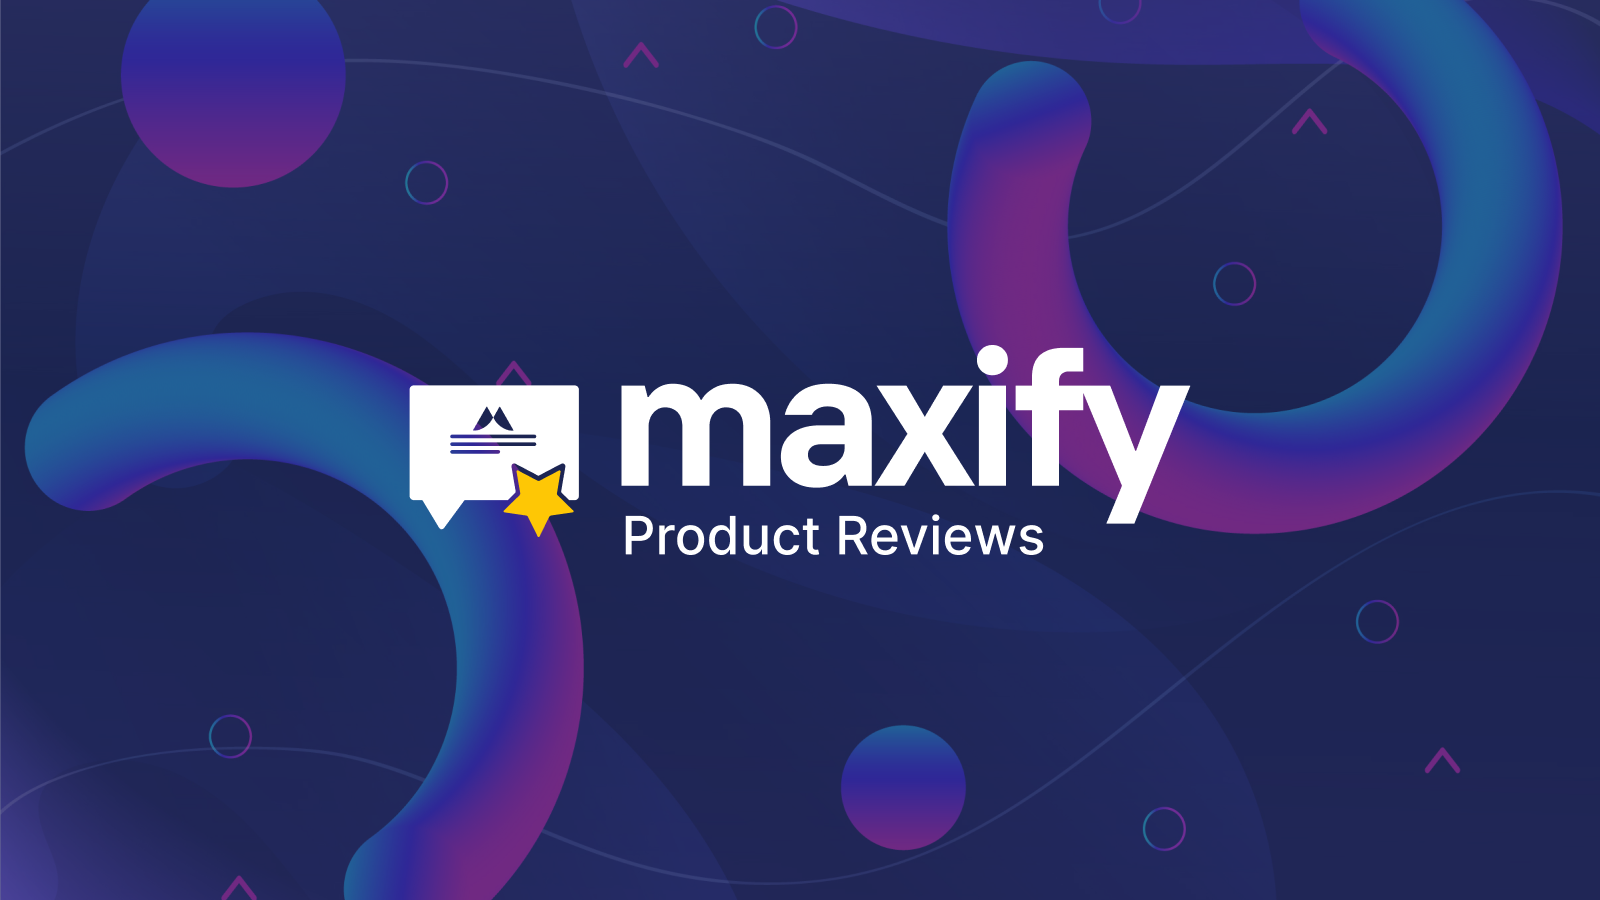 Hervorgehobenes Bild von Maxify Product Reviews